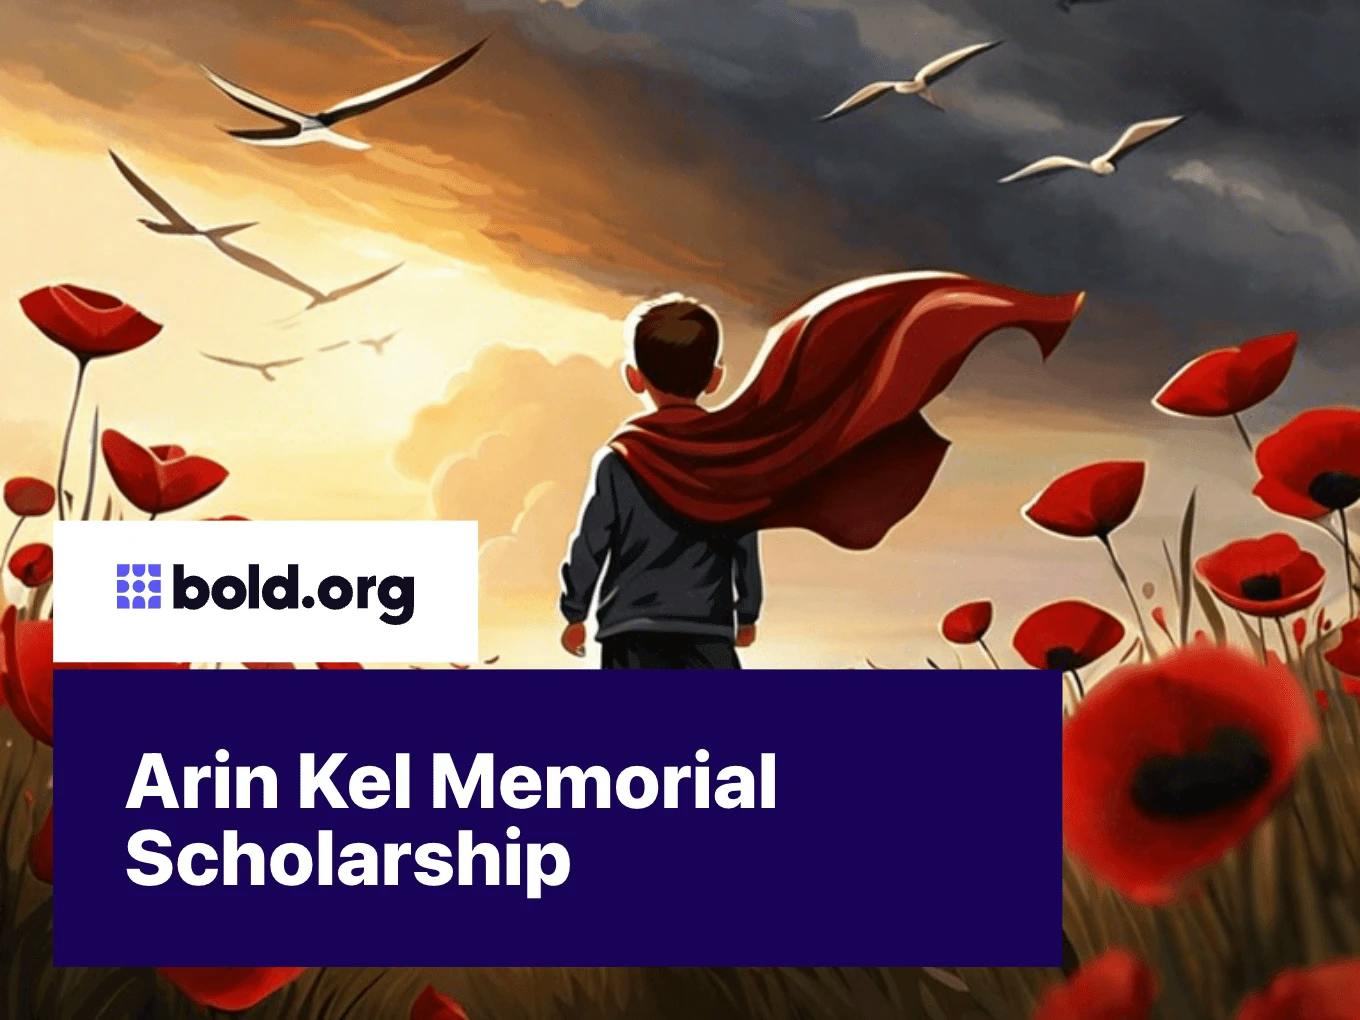 Arin Kel Memorial Scholarship